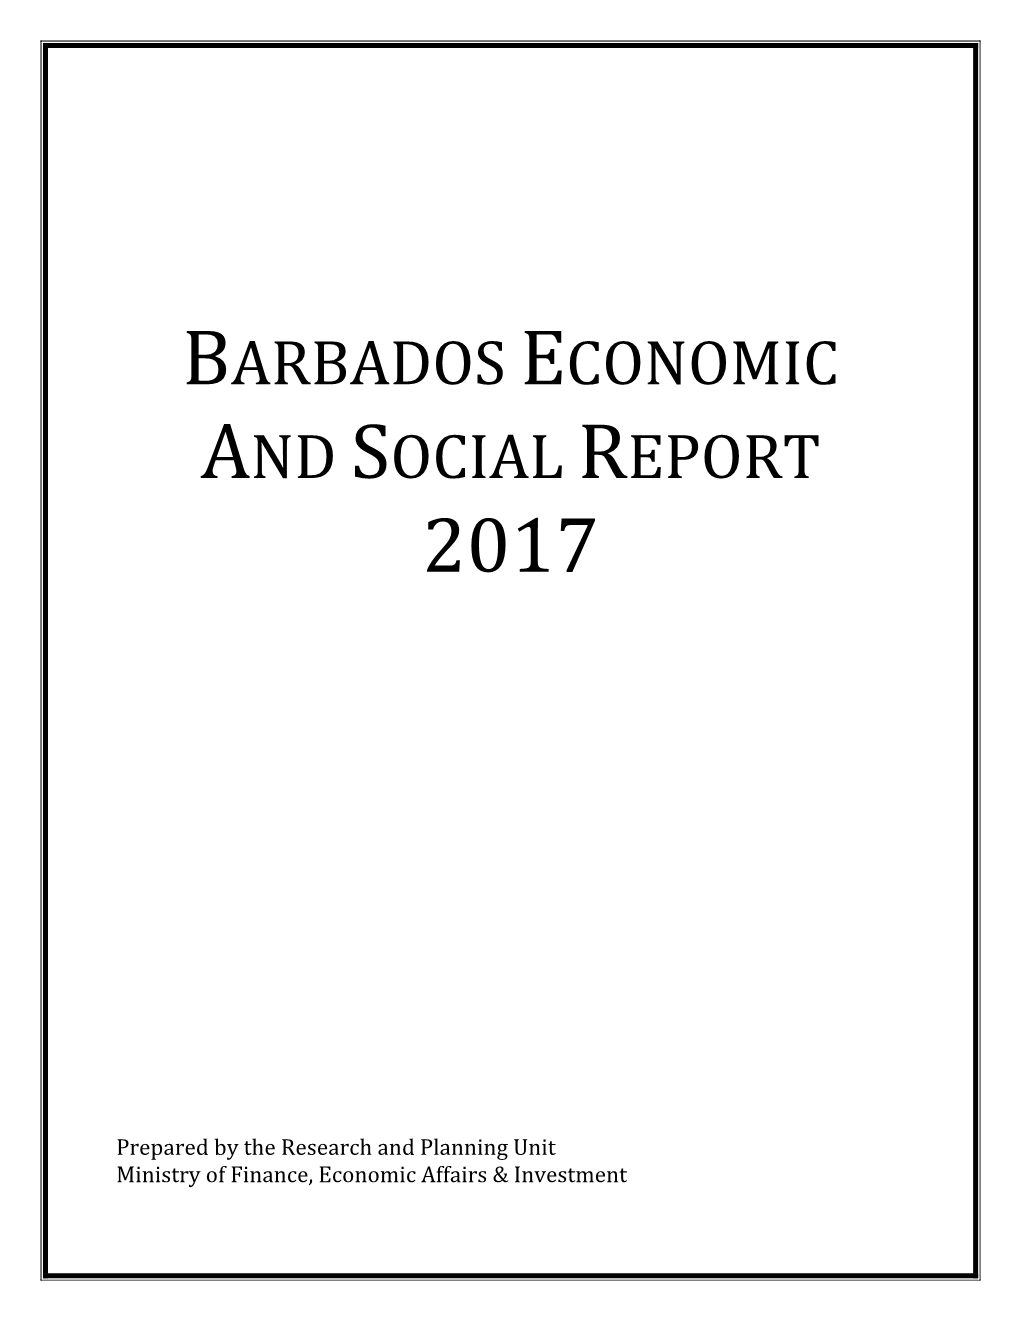 Barbados Economic and Social Report 2017